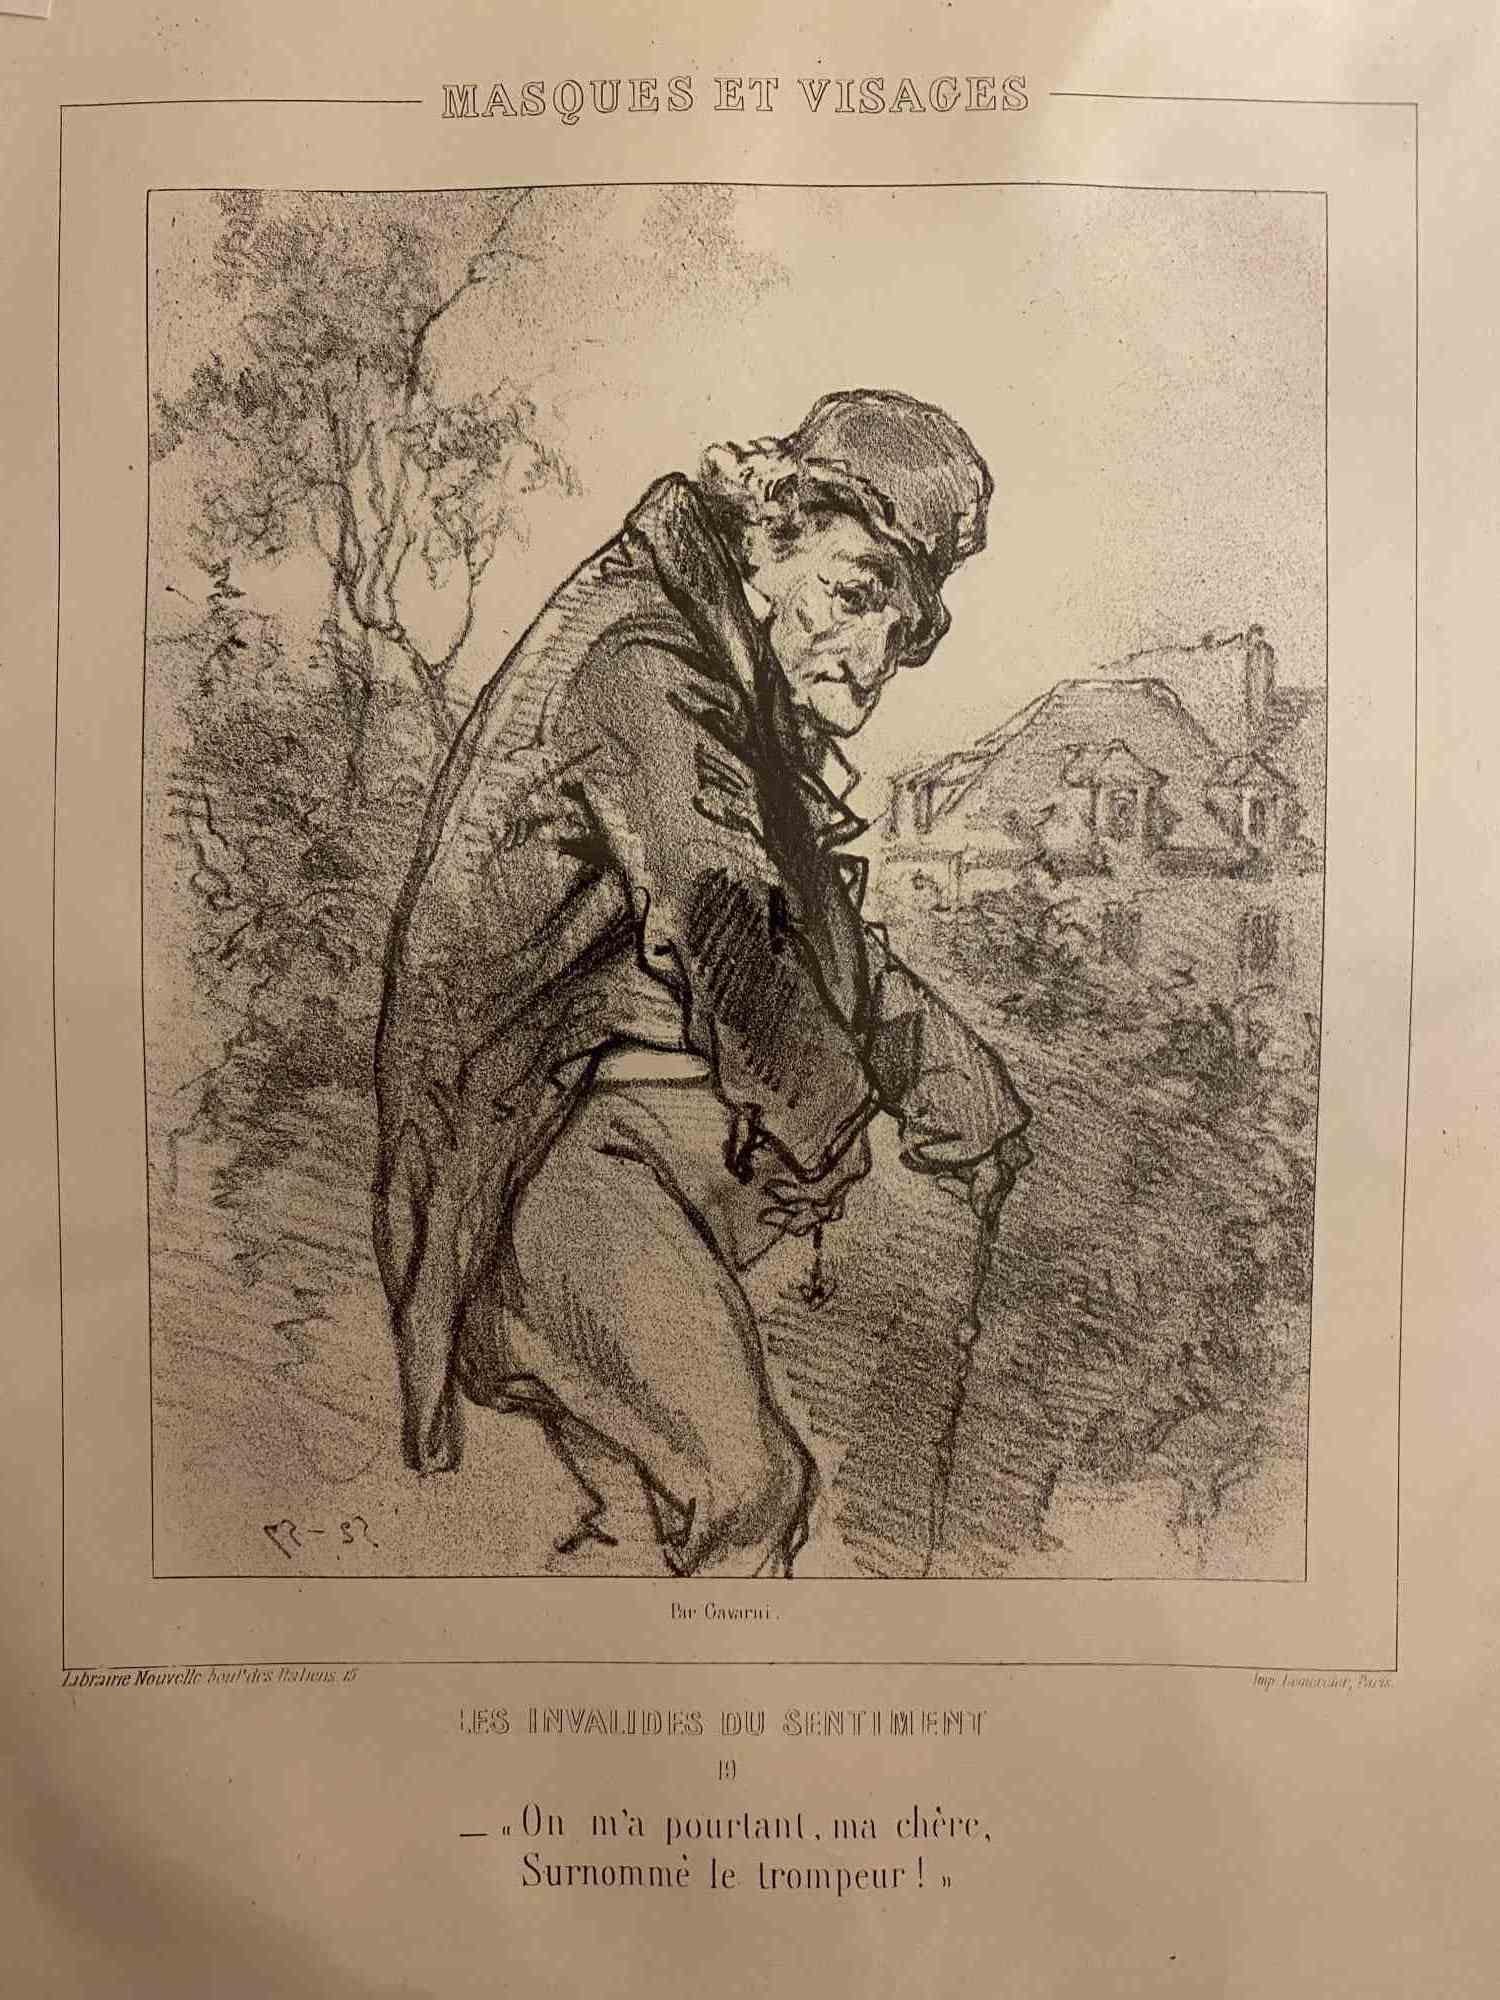 Les Invalides du Sentiment – Originallithographie von Paul Gavarni – 1850er Jahre